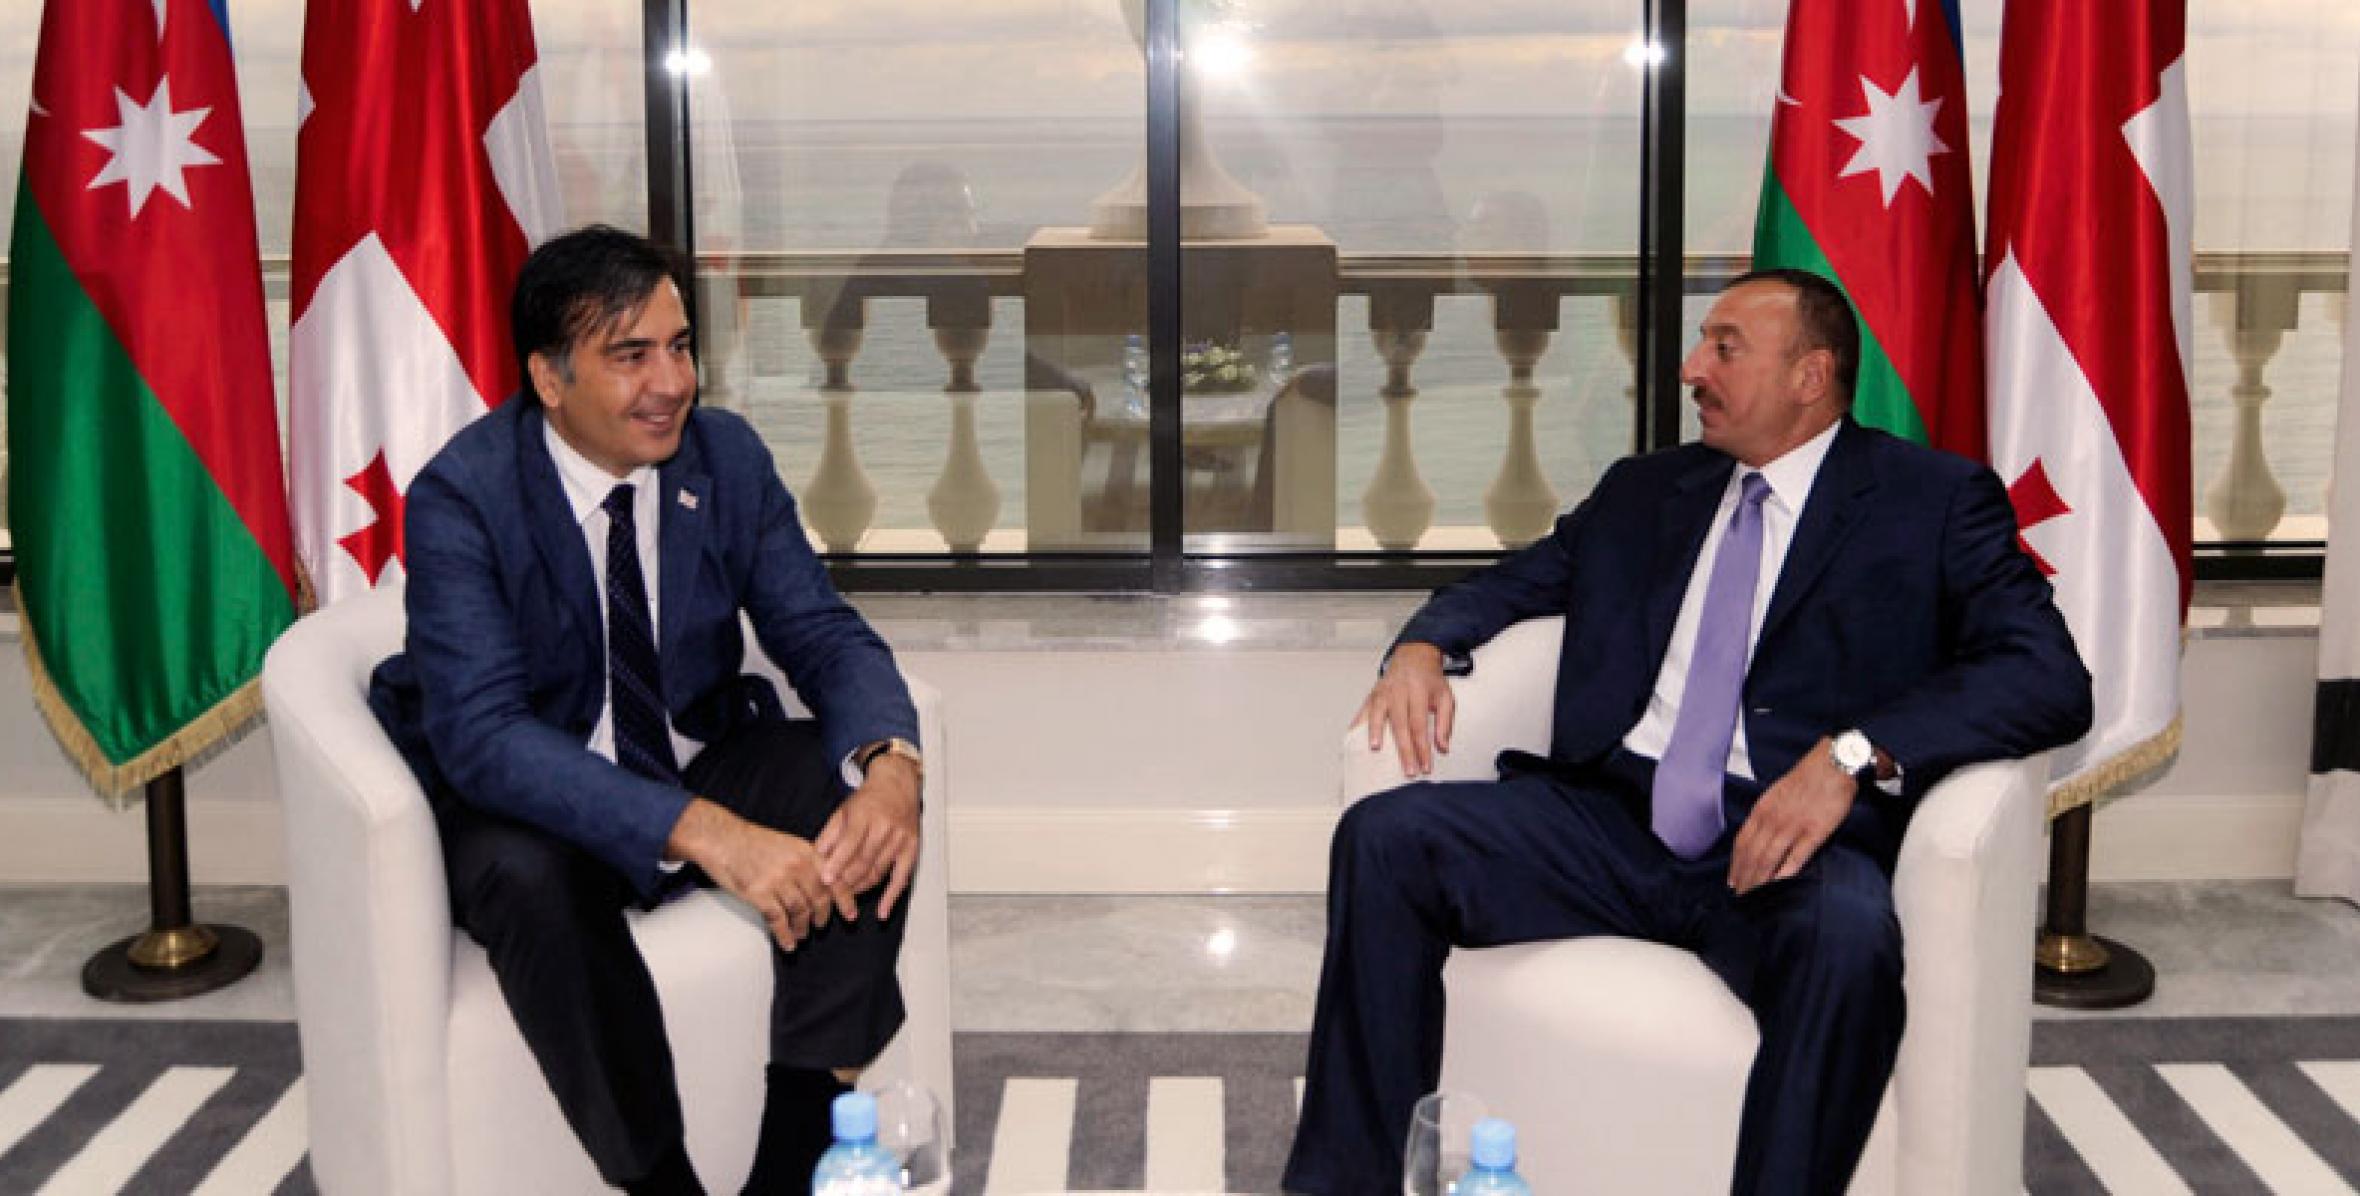 Presidents of Azerbaijan and Georgia met in private